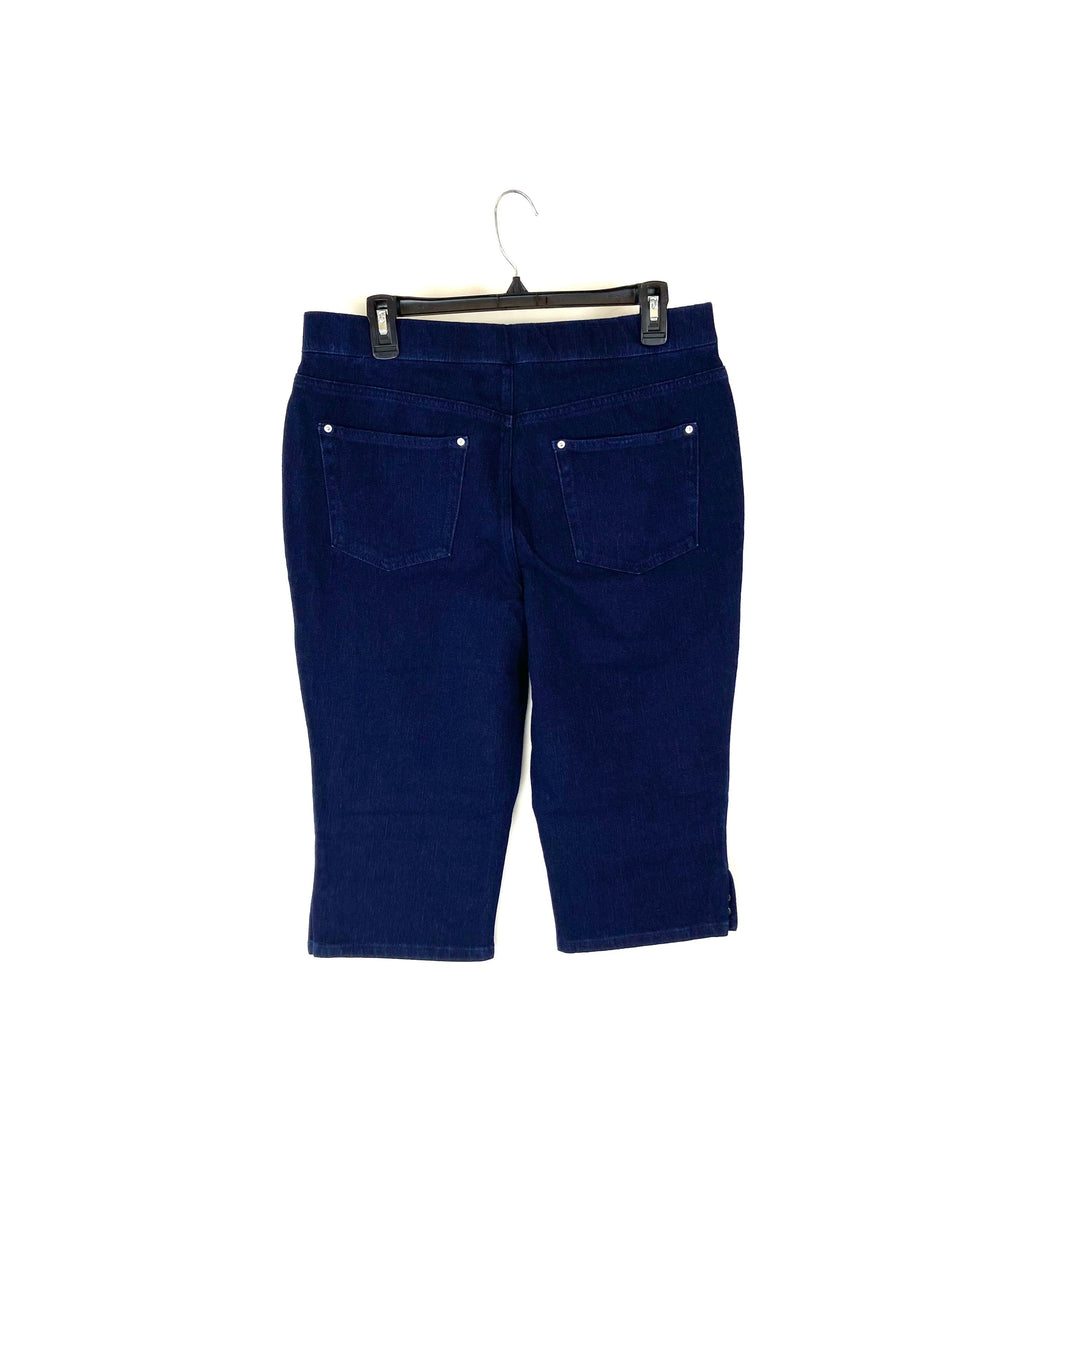 Dark Wash Capri Jeans - Size 6/8, 12/14